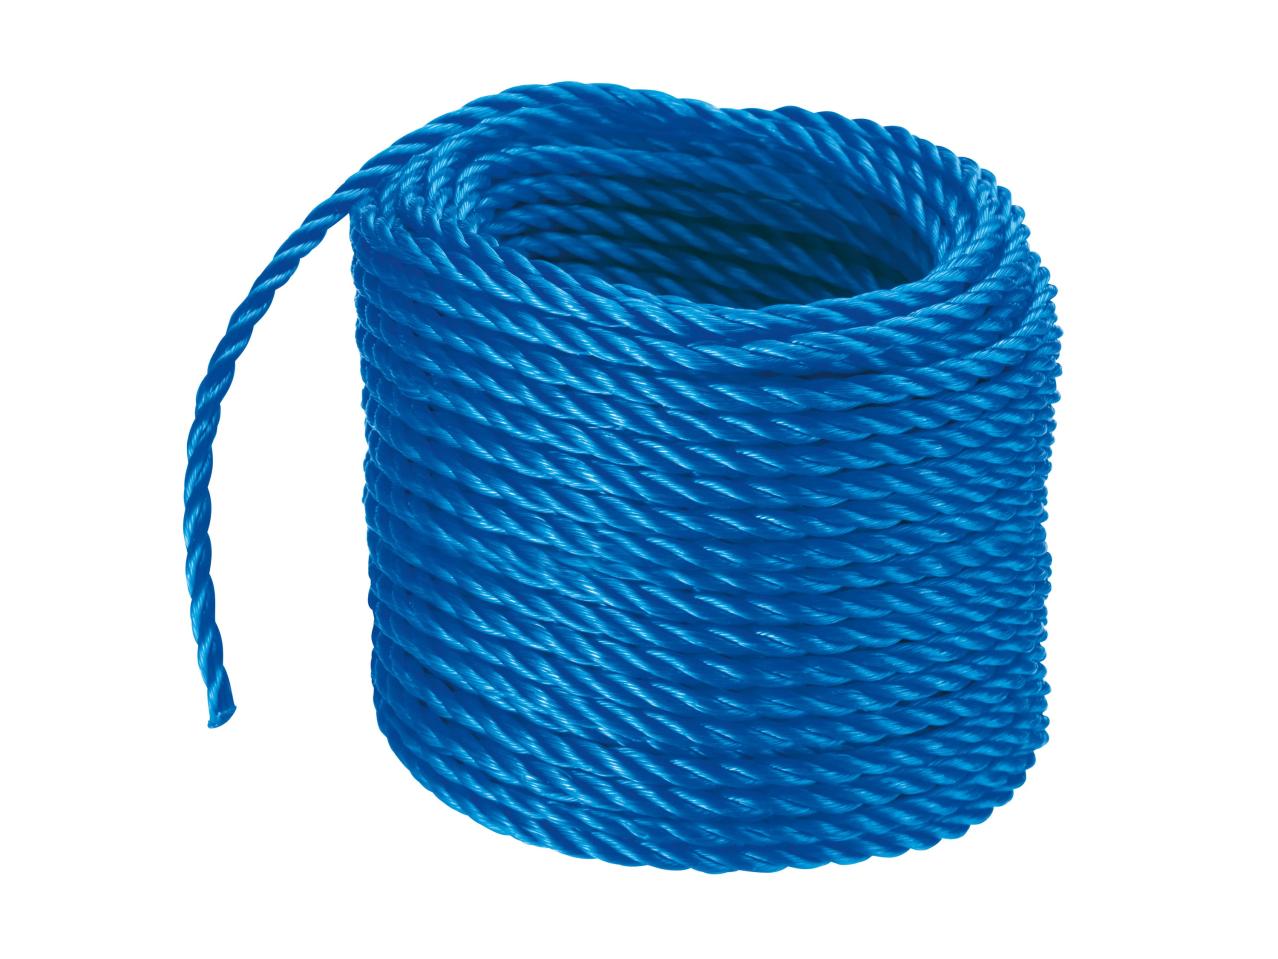 Corde universelle, corde multi-usage, cordeau de maçon ou ficelle